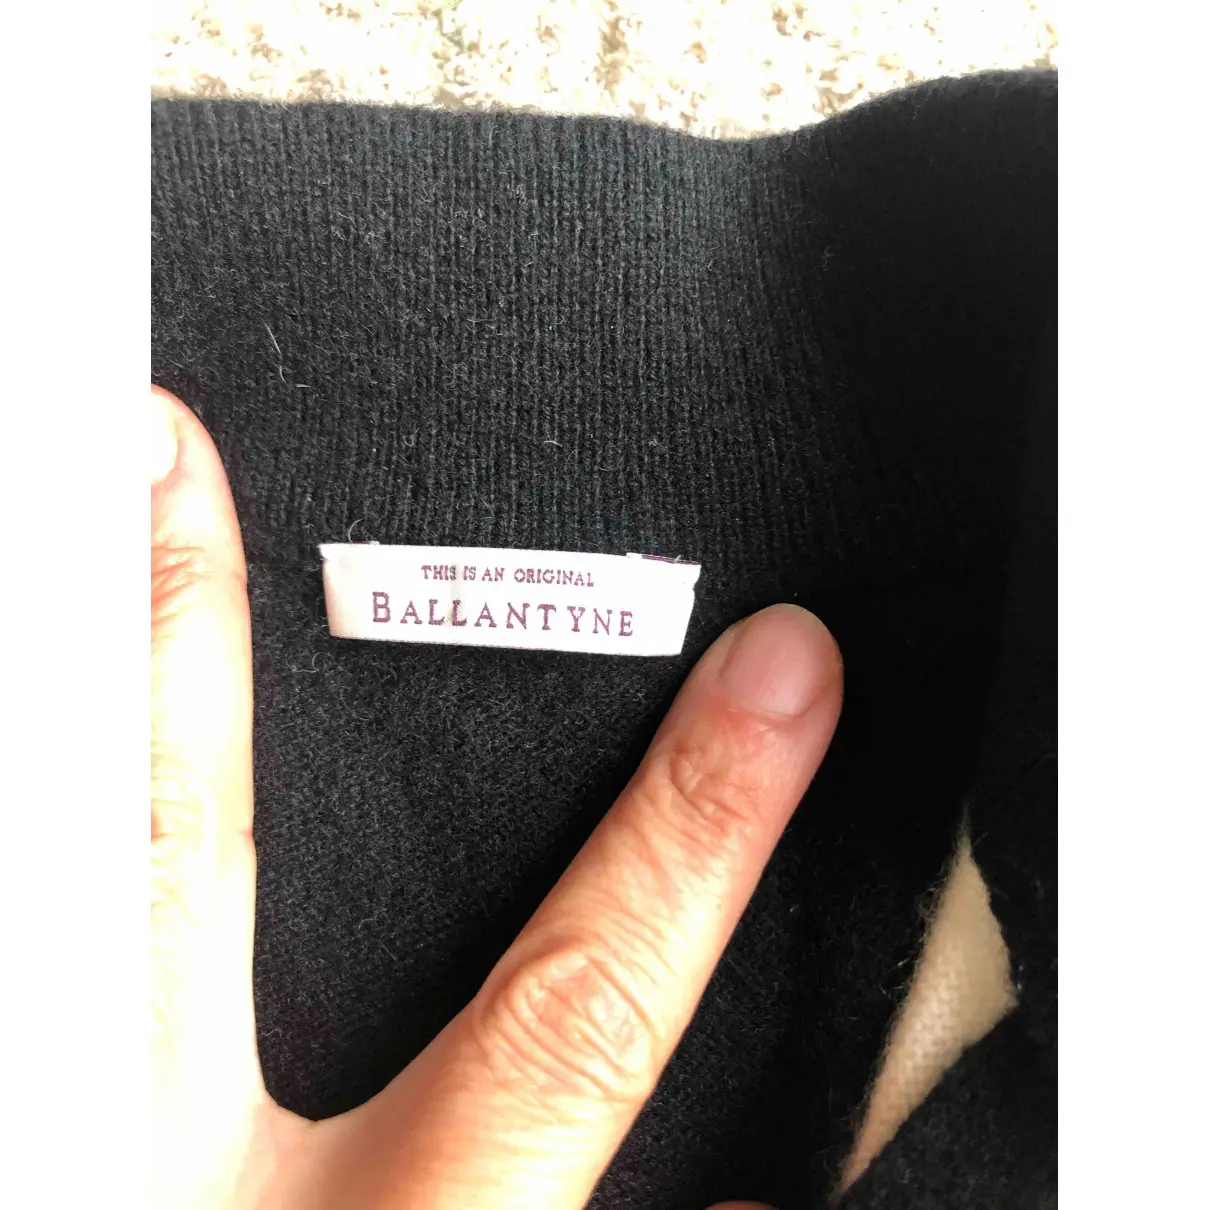 Buy Ballantyne Cashmere sweater online